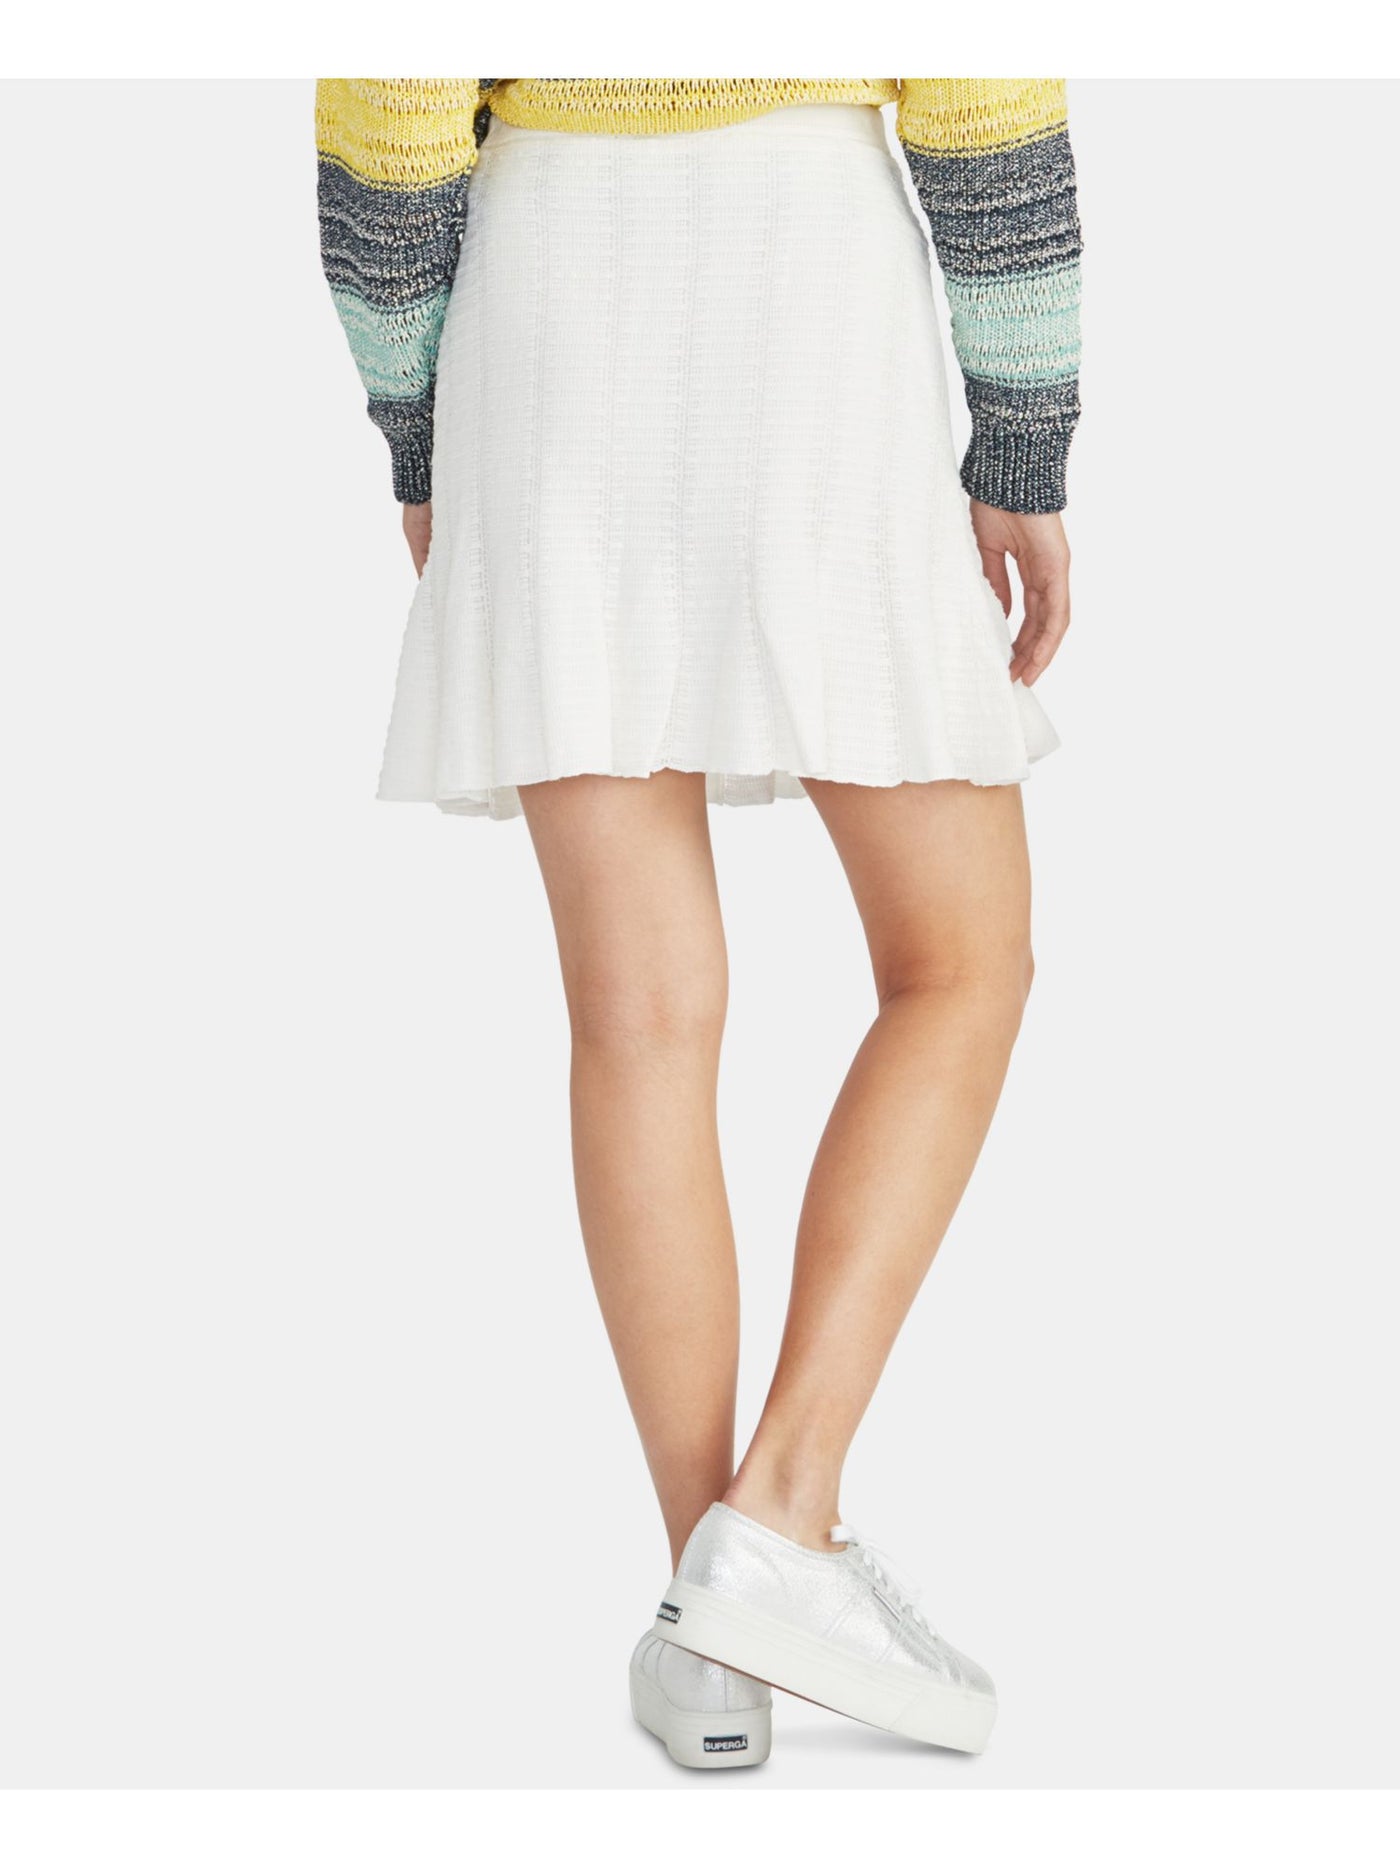 RACHEL ROY Womens White Mini Ruffled Skirt L